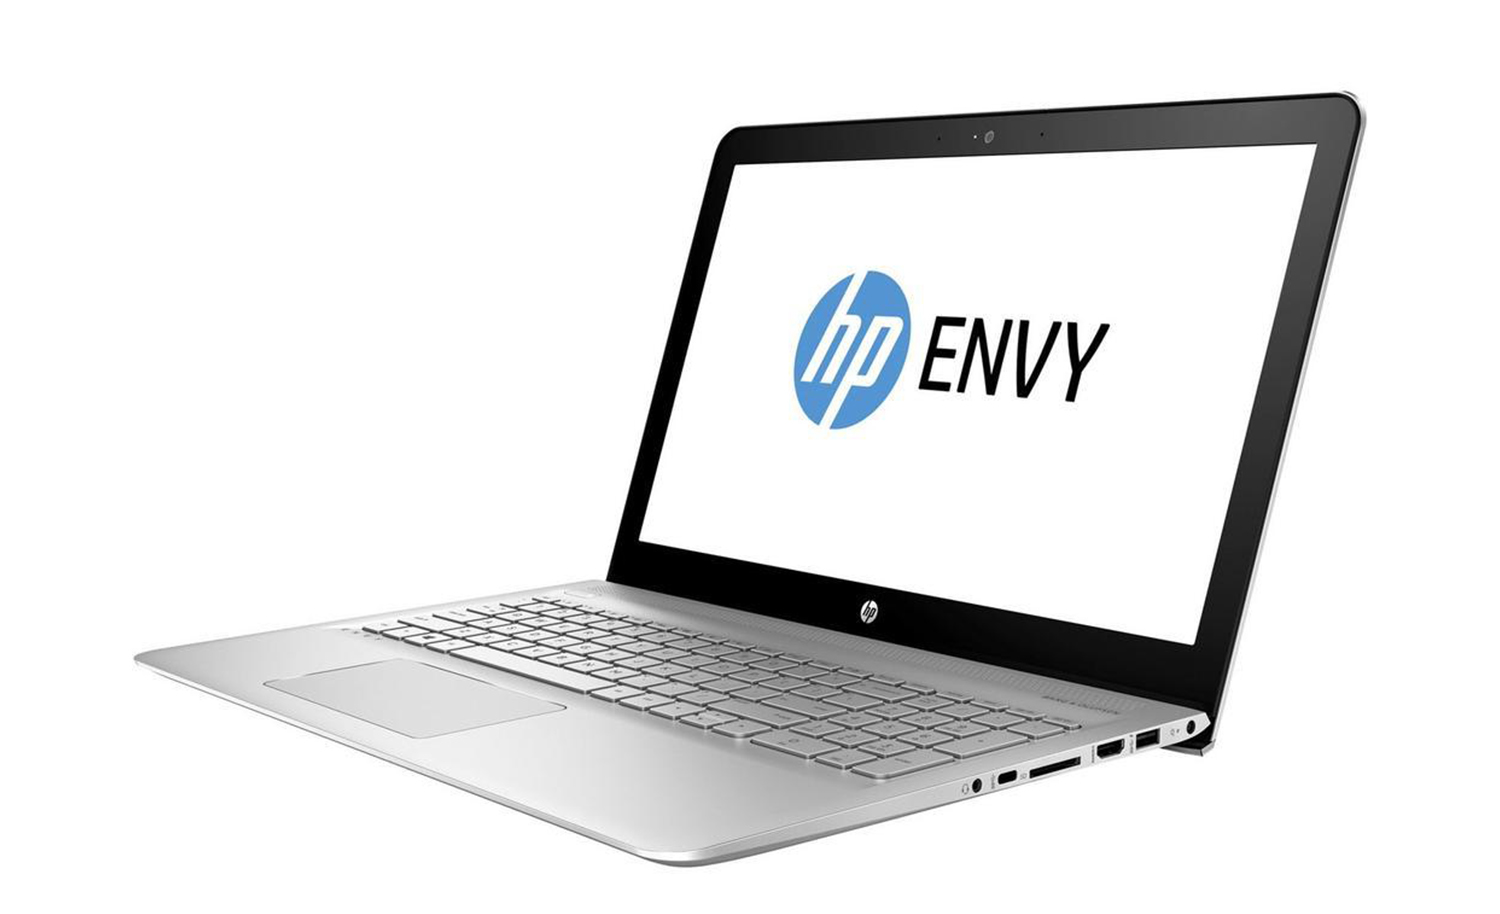 HP Envy Notebook Intel Core i7 7th Gen 8GB RAM 256GB SSD Touchscreen Windows 10 Home